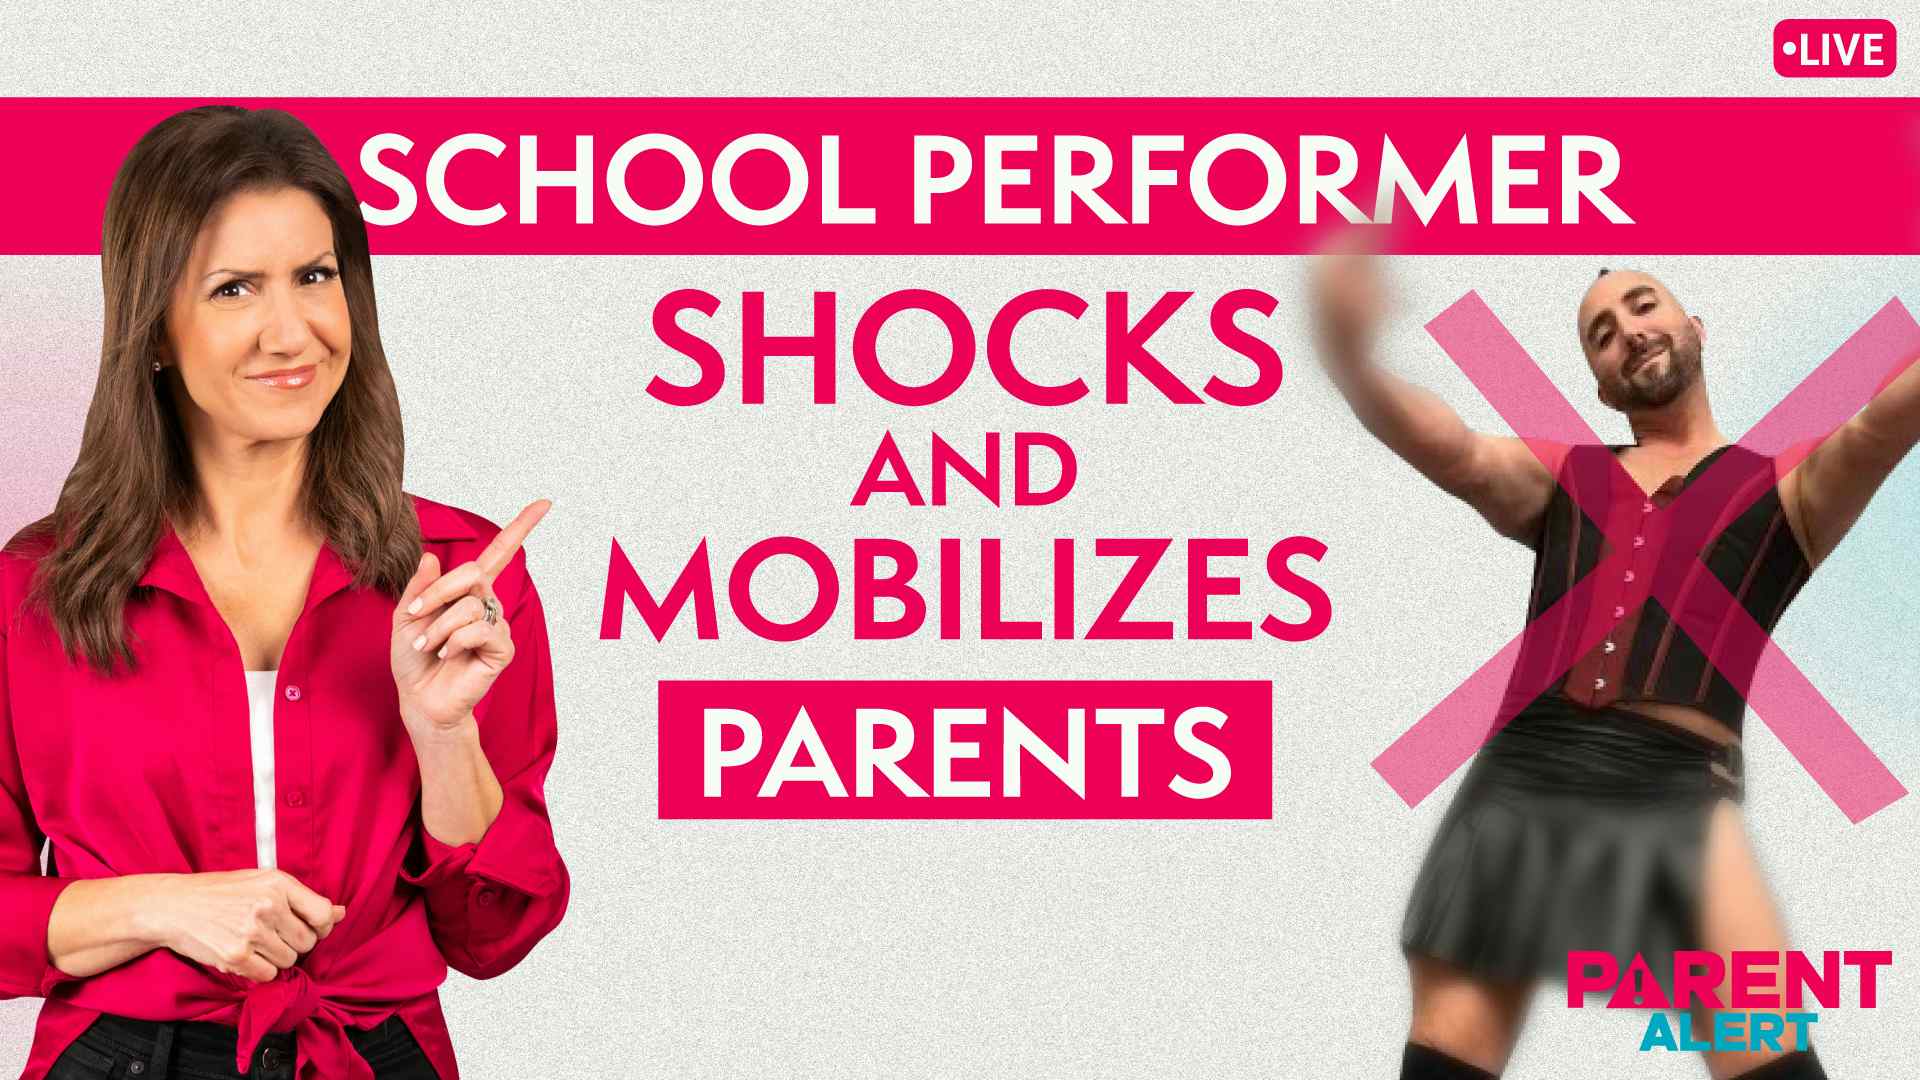 Parent Alert: School Performer's Social Media Shocks and Mobilizes Parents